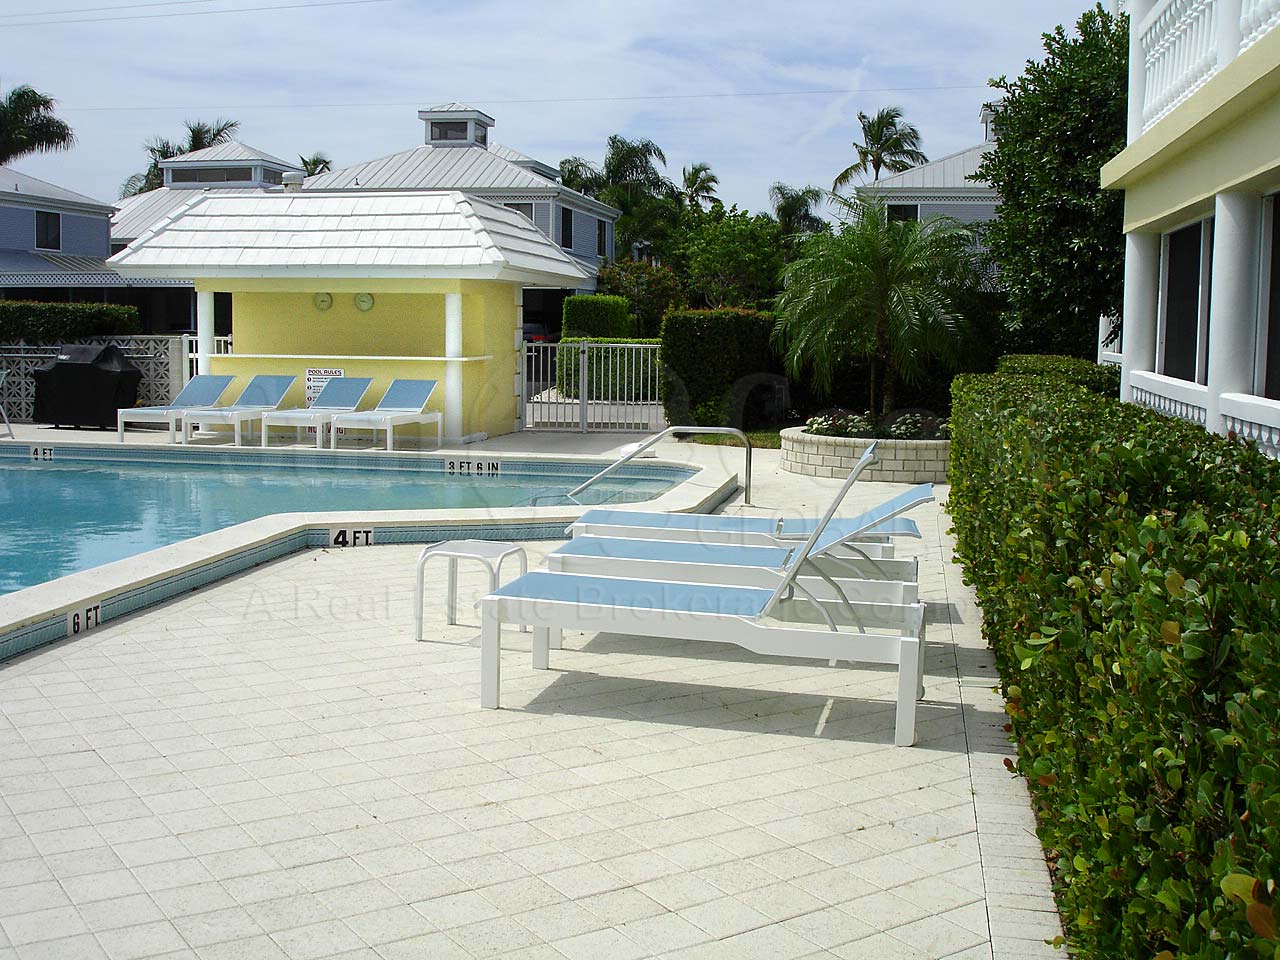 Colonnade Club Community Pool and Sun Deck Furnishings